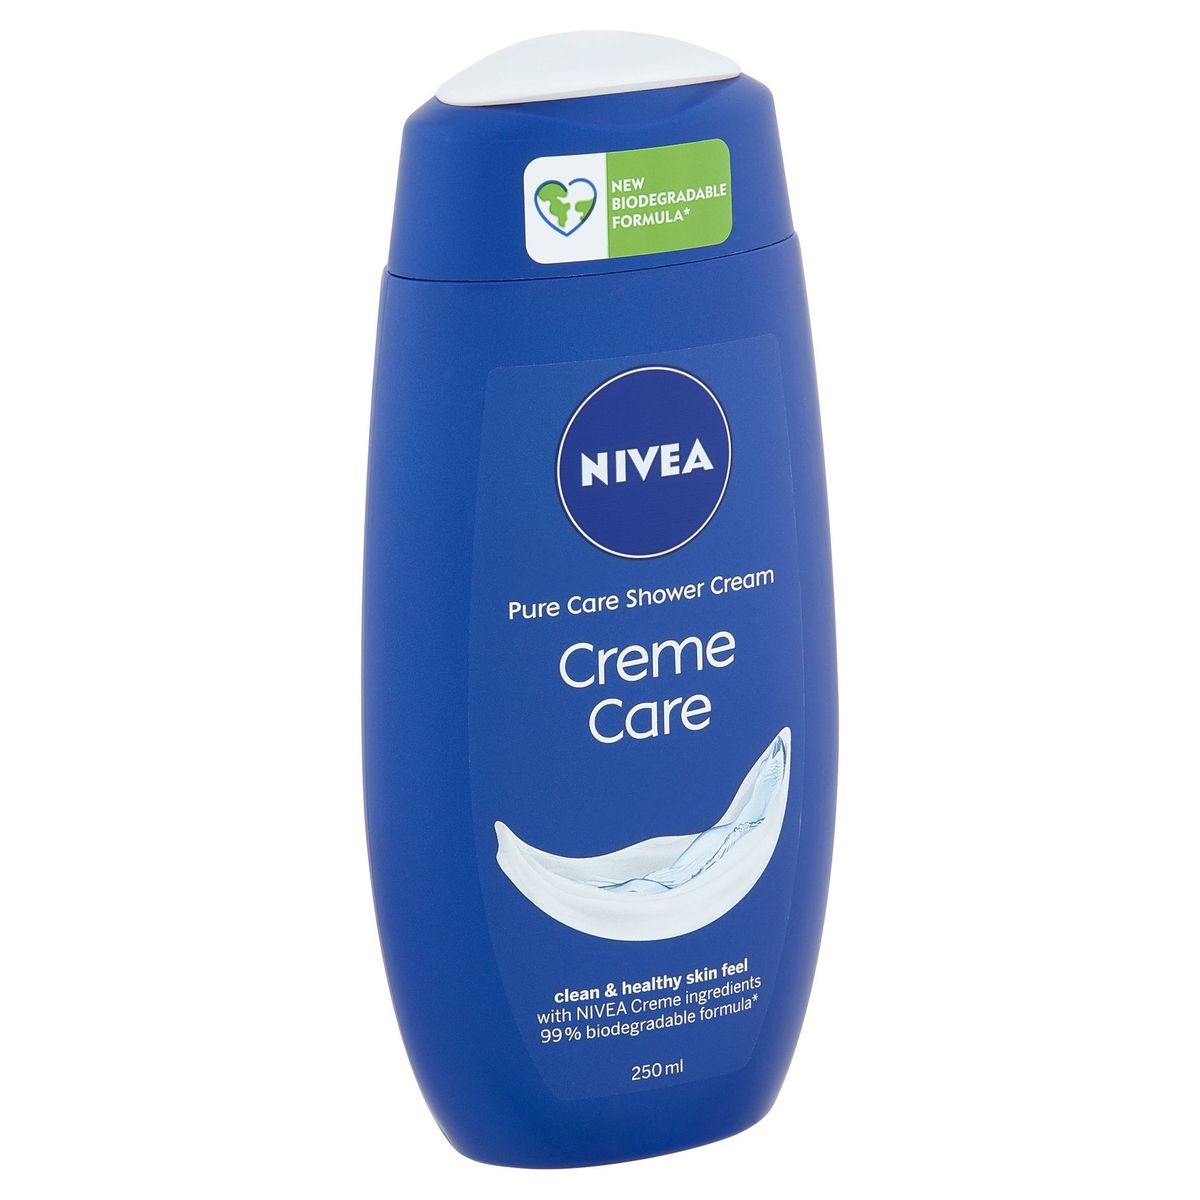 Nivea Pure Care Shower Cream Creme Care 250 ml | Carrefour Site